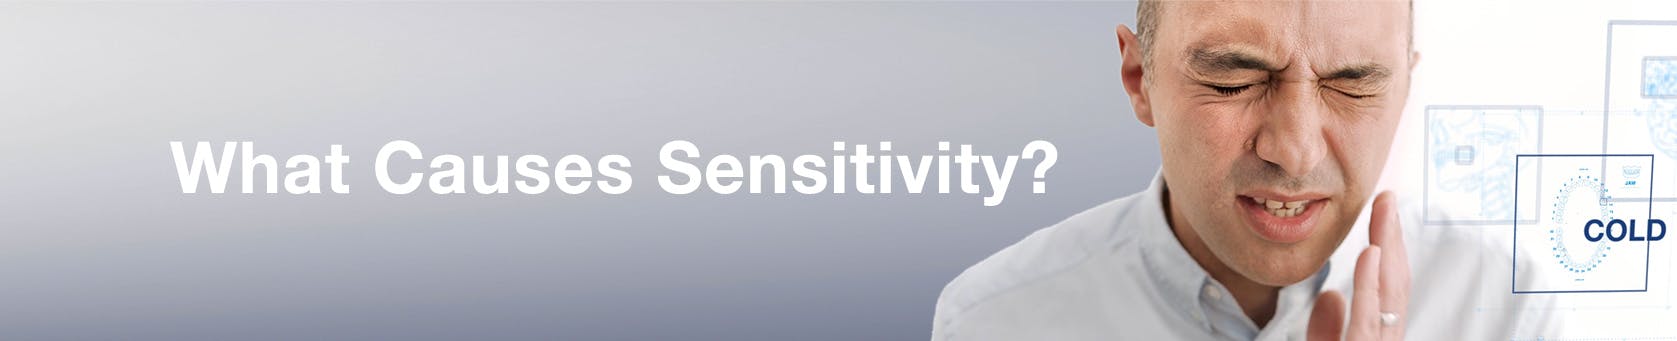 Causes Of Sensitivity